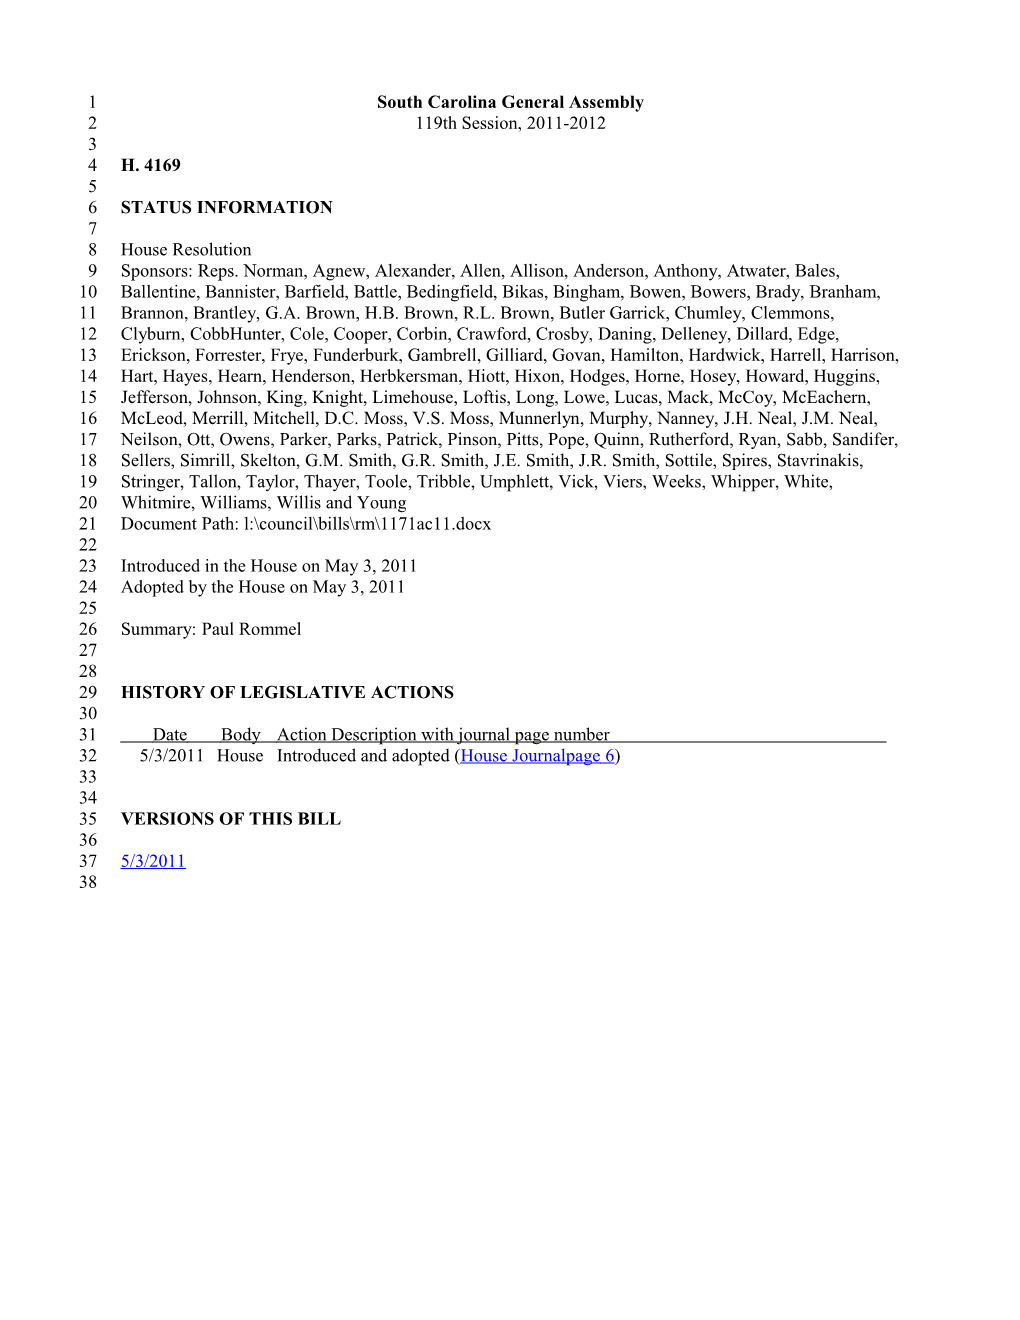 2011-2012 Bill 4169: Paul Rommel - South Carolina Legislature Online